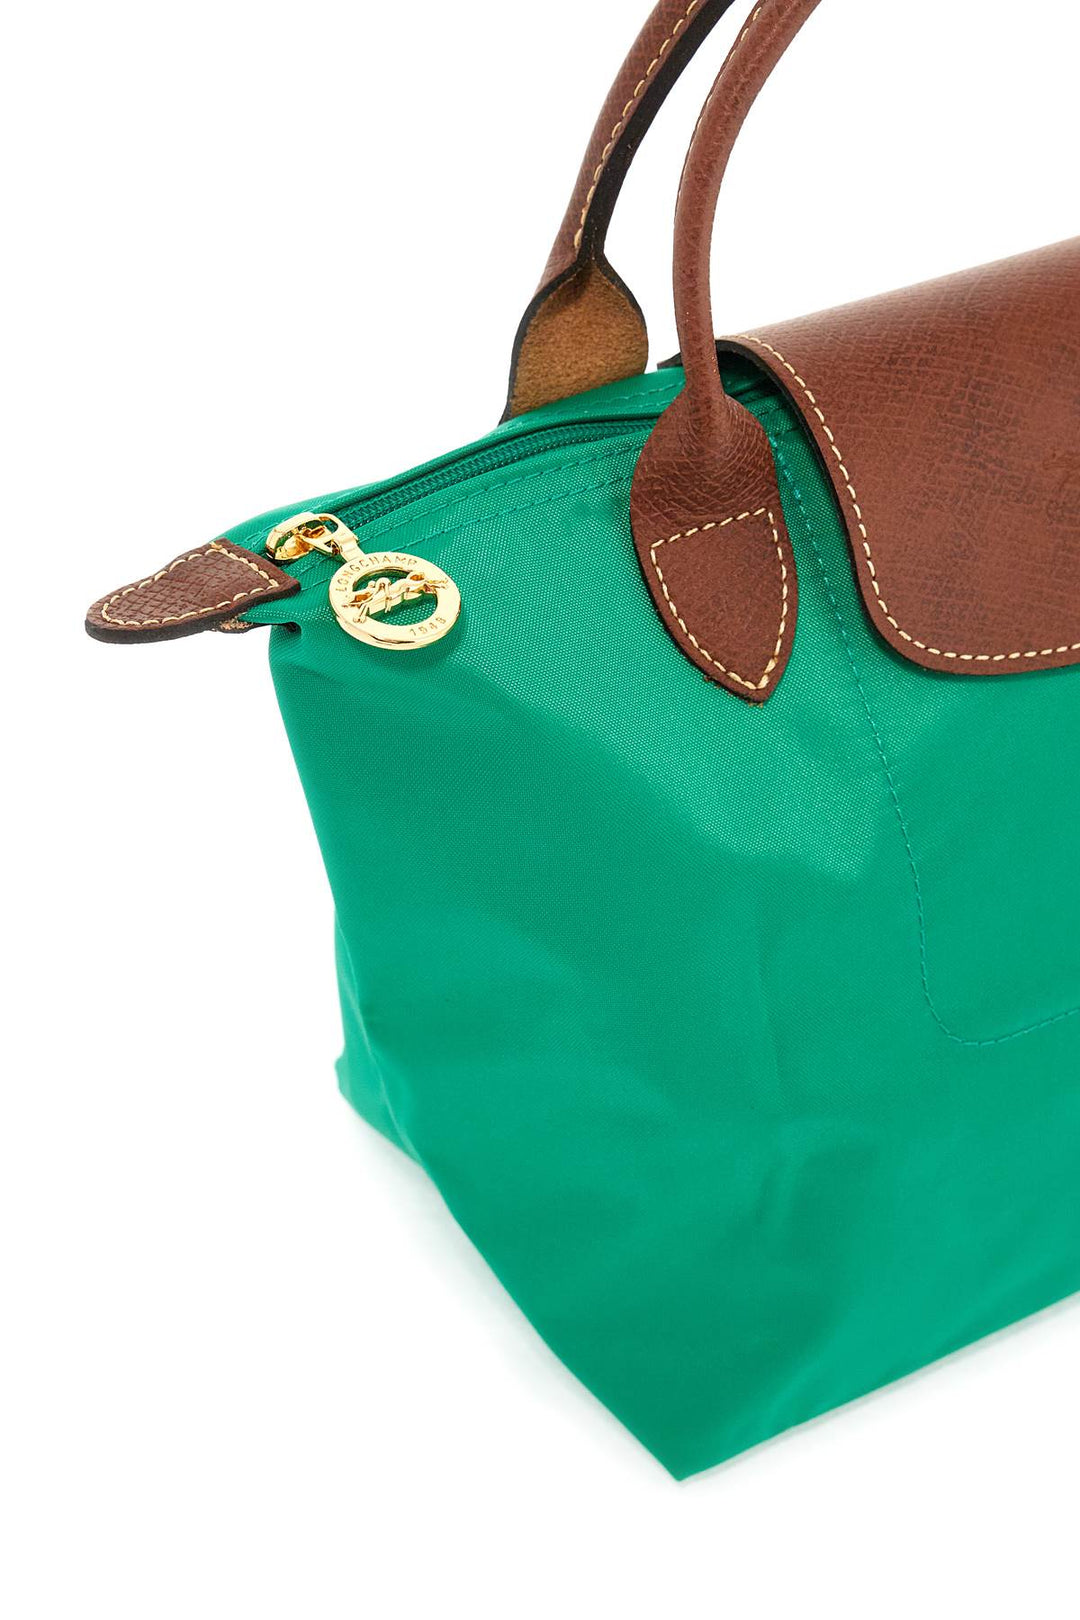 Longchamp Le Pliage Original S Handbag   Green